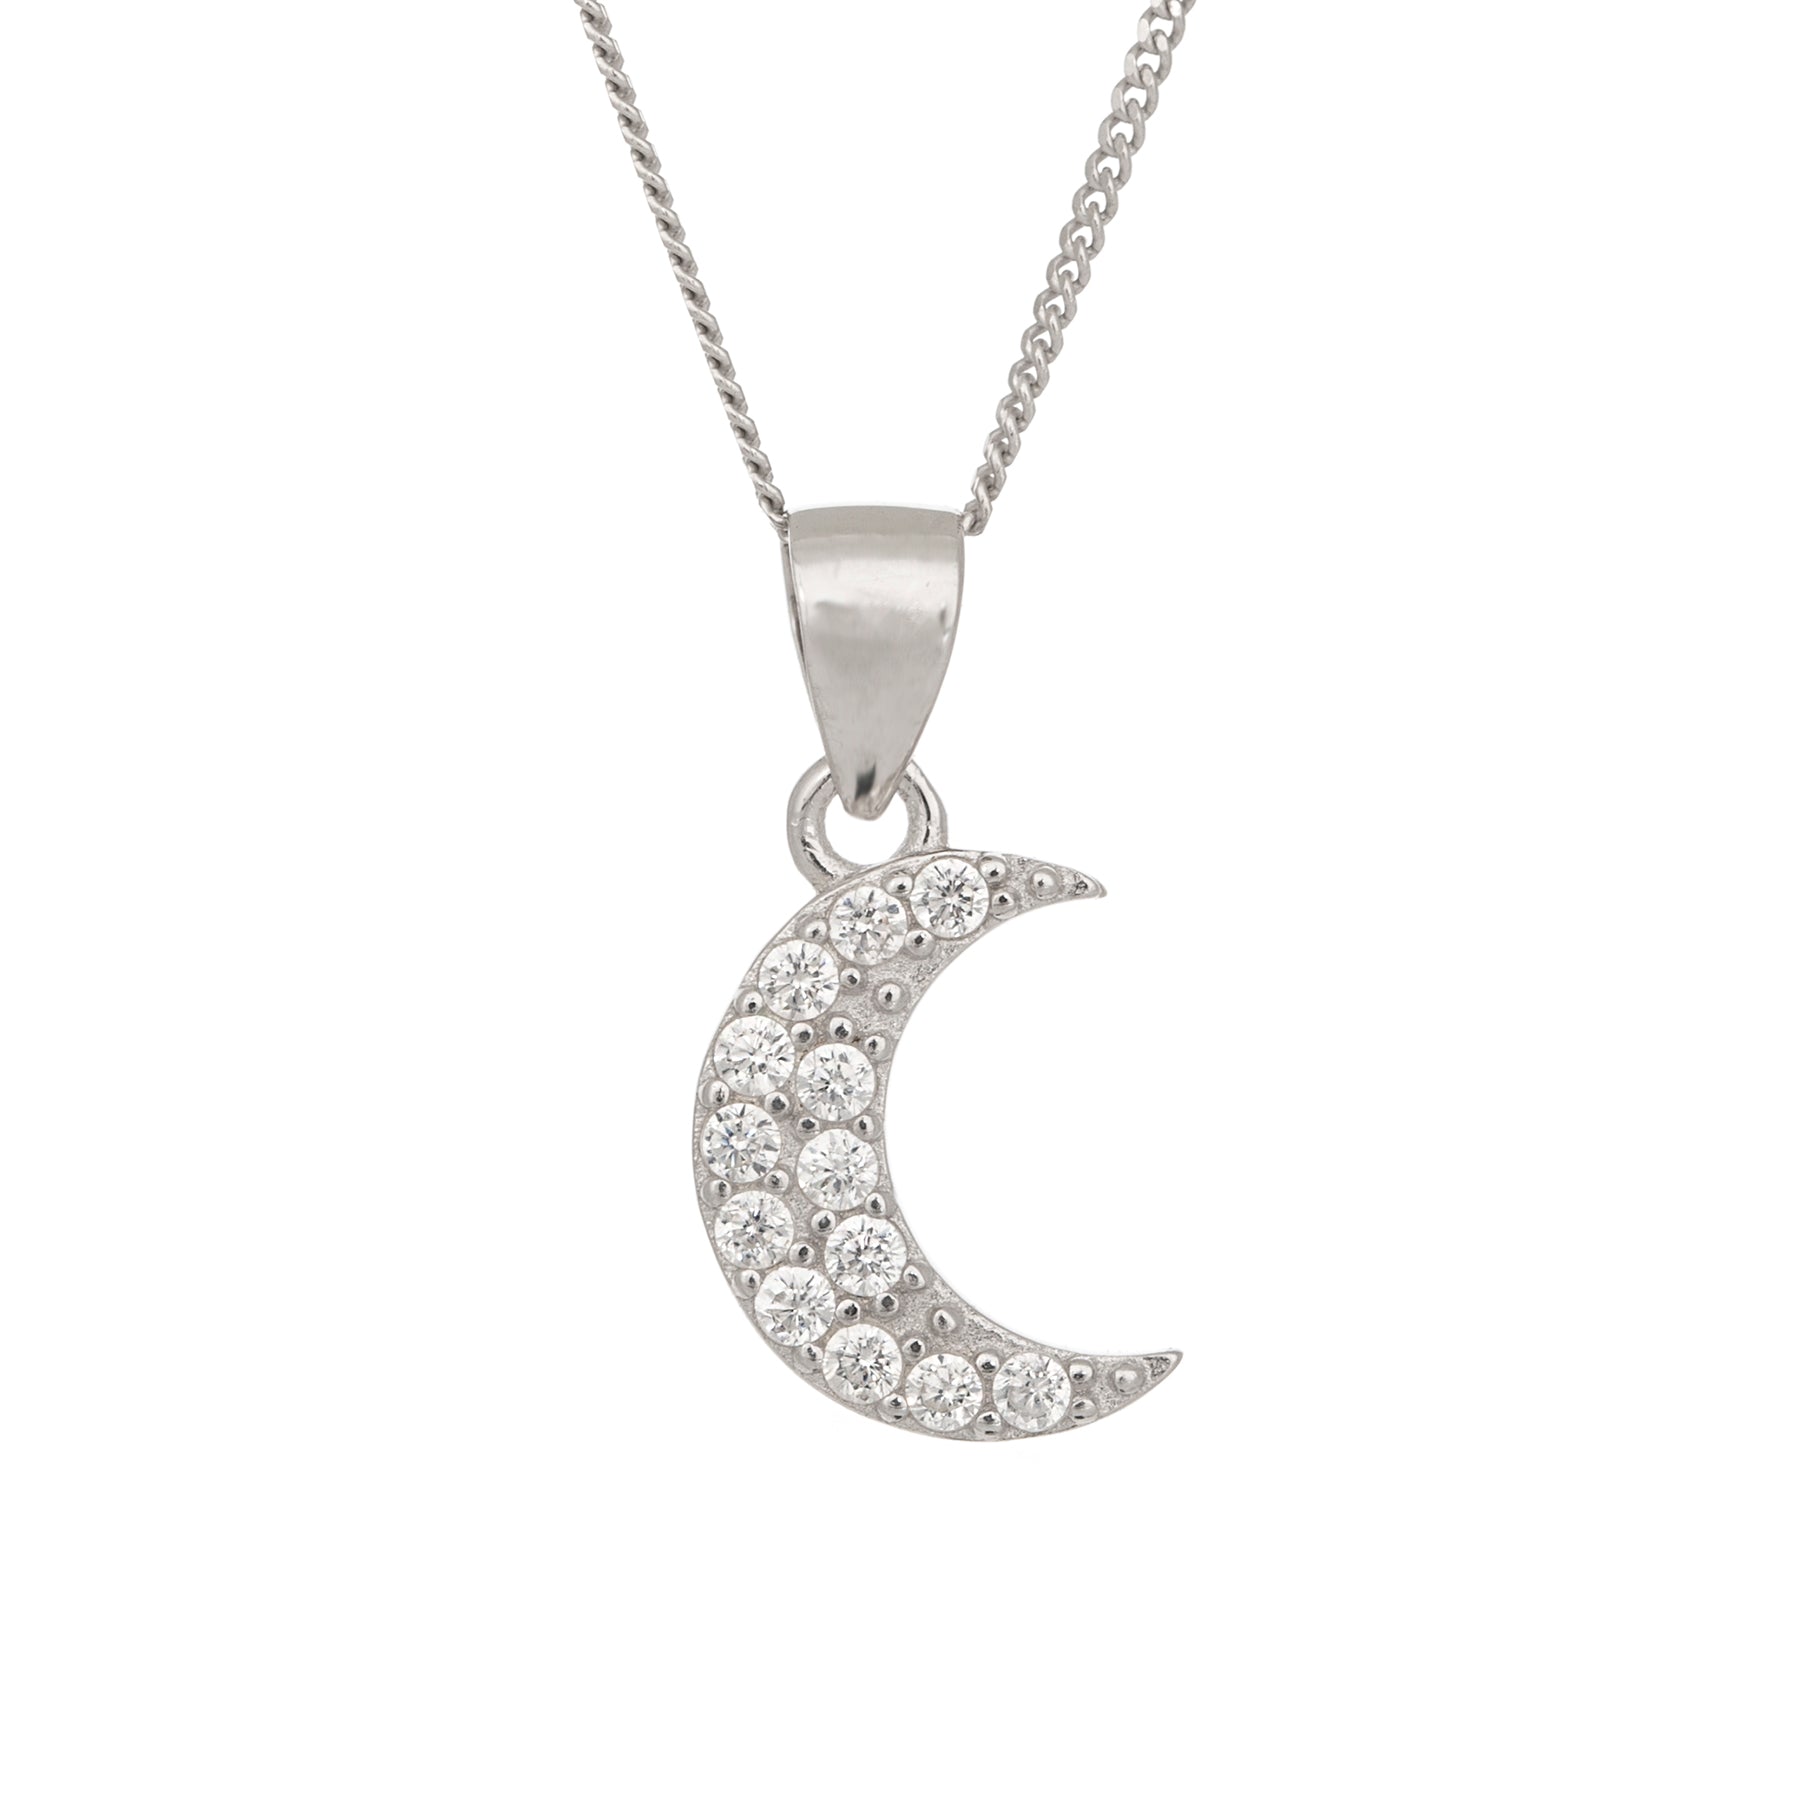 Glistening moon pendant